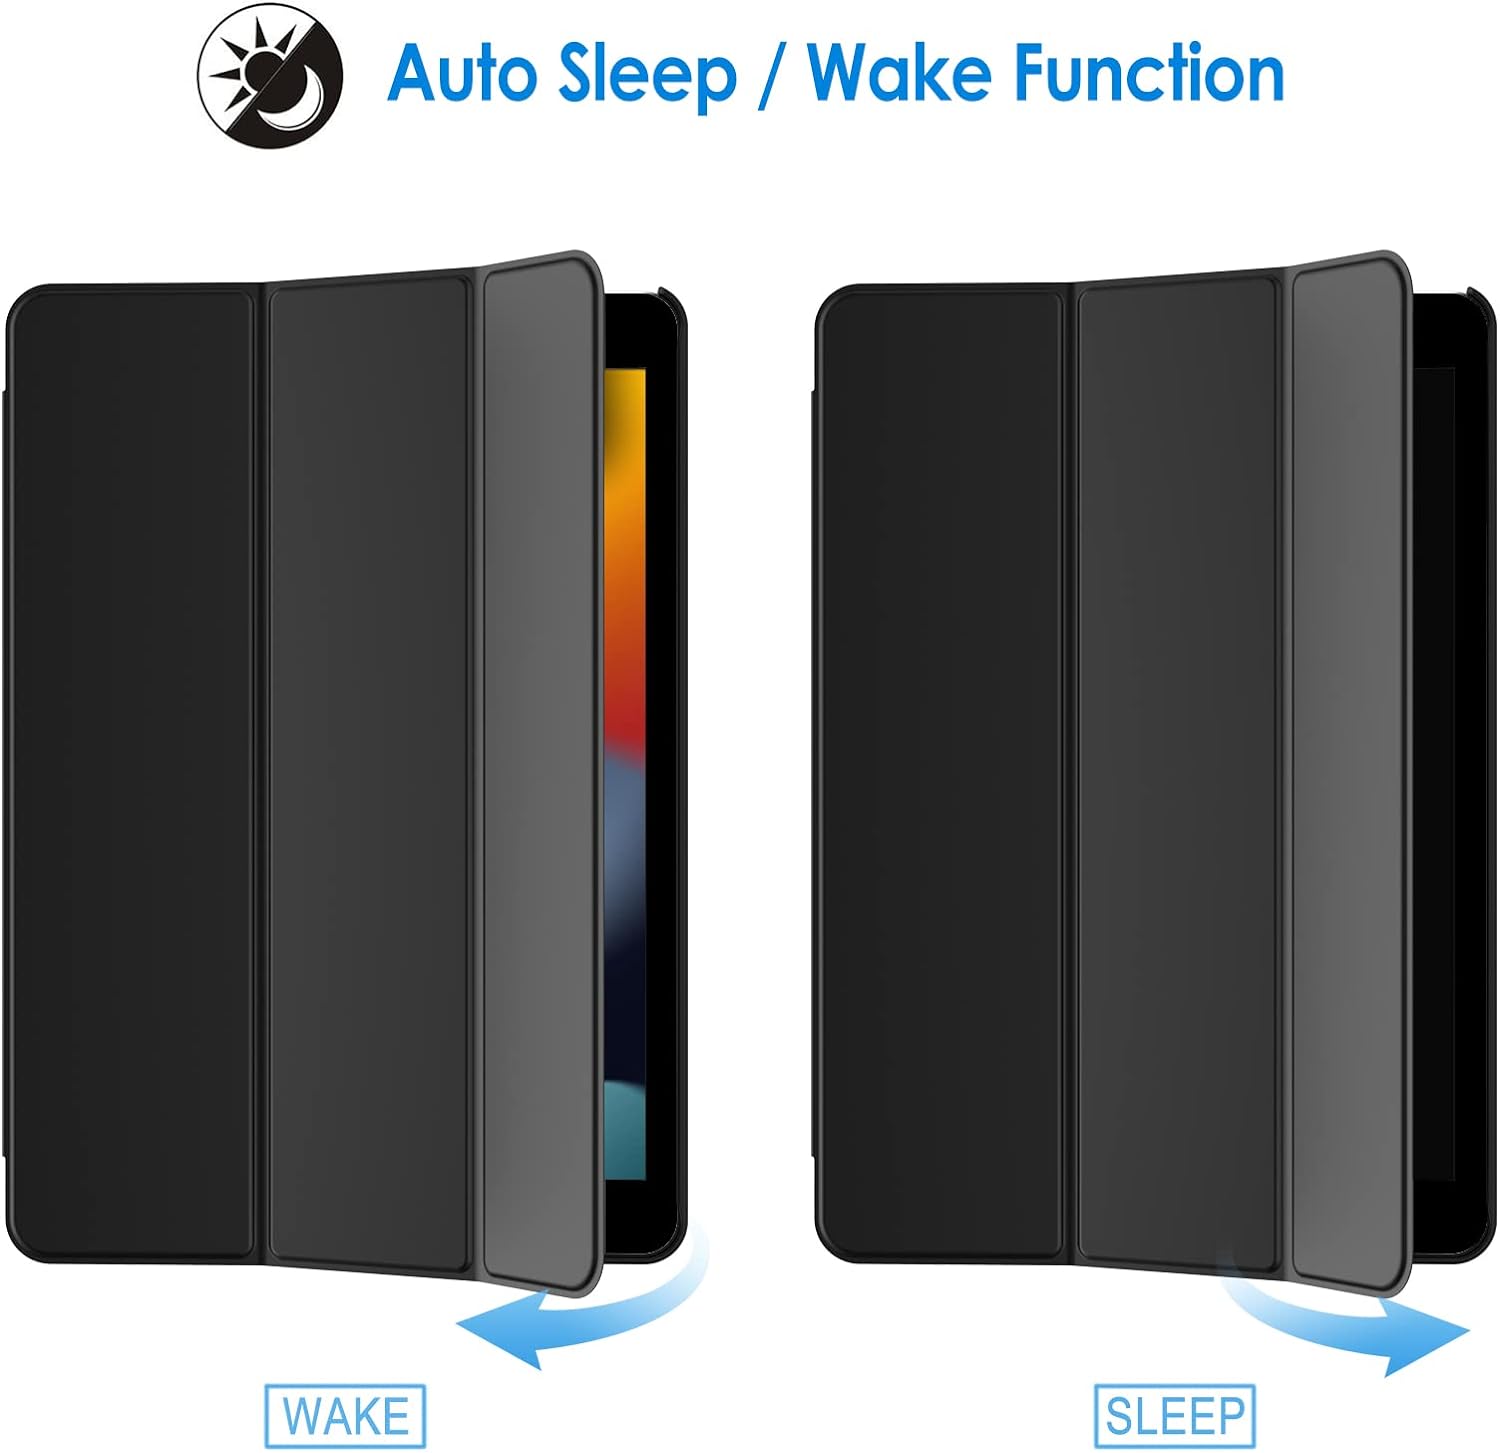 JETech Case for iPad 10.2-Inch (2021/2020/2019 Model, 9/8/7 Generation), Auto Wake/Sleep Cover (Black)